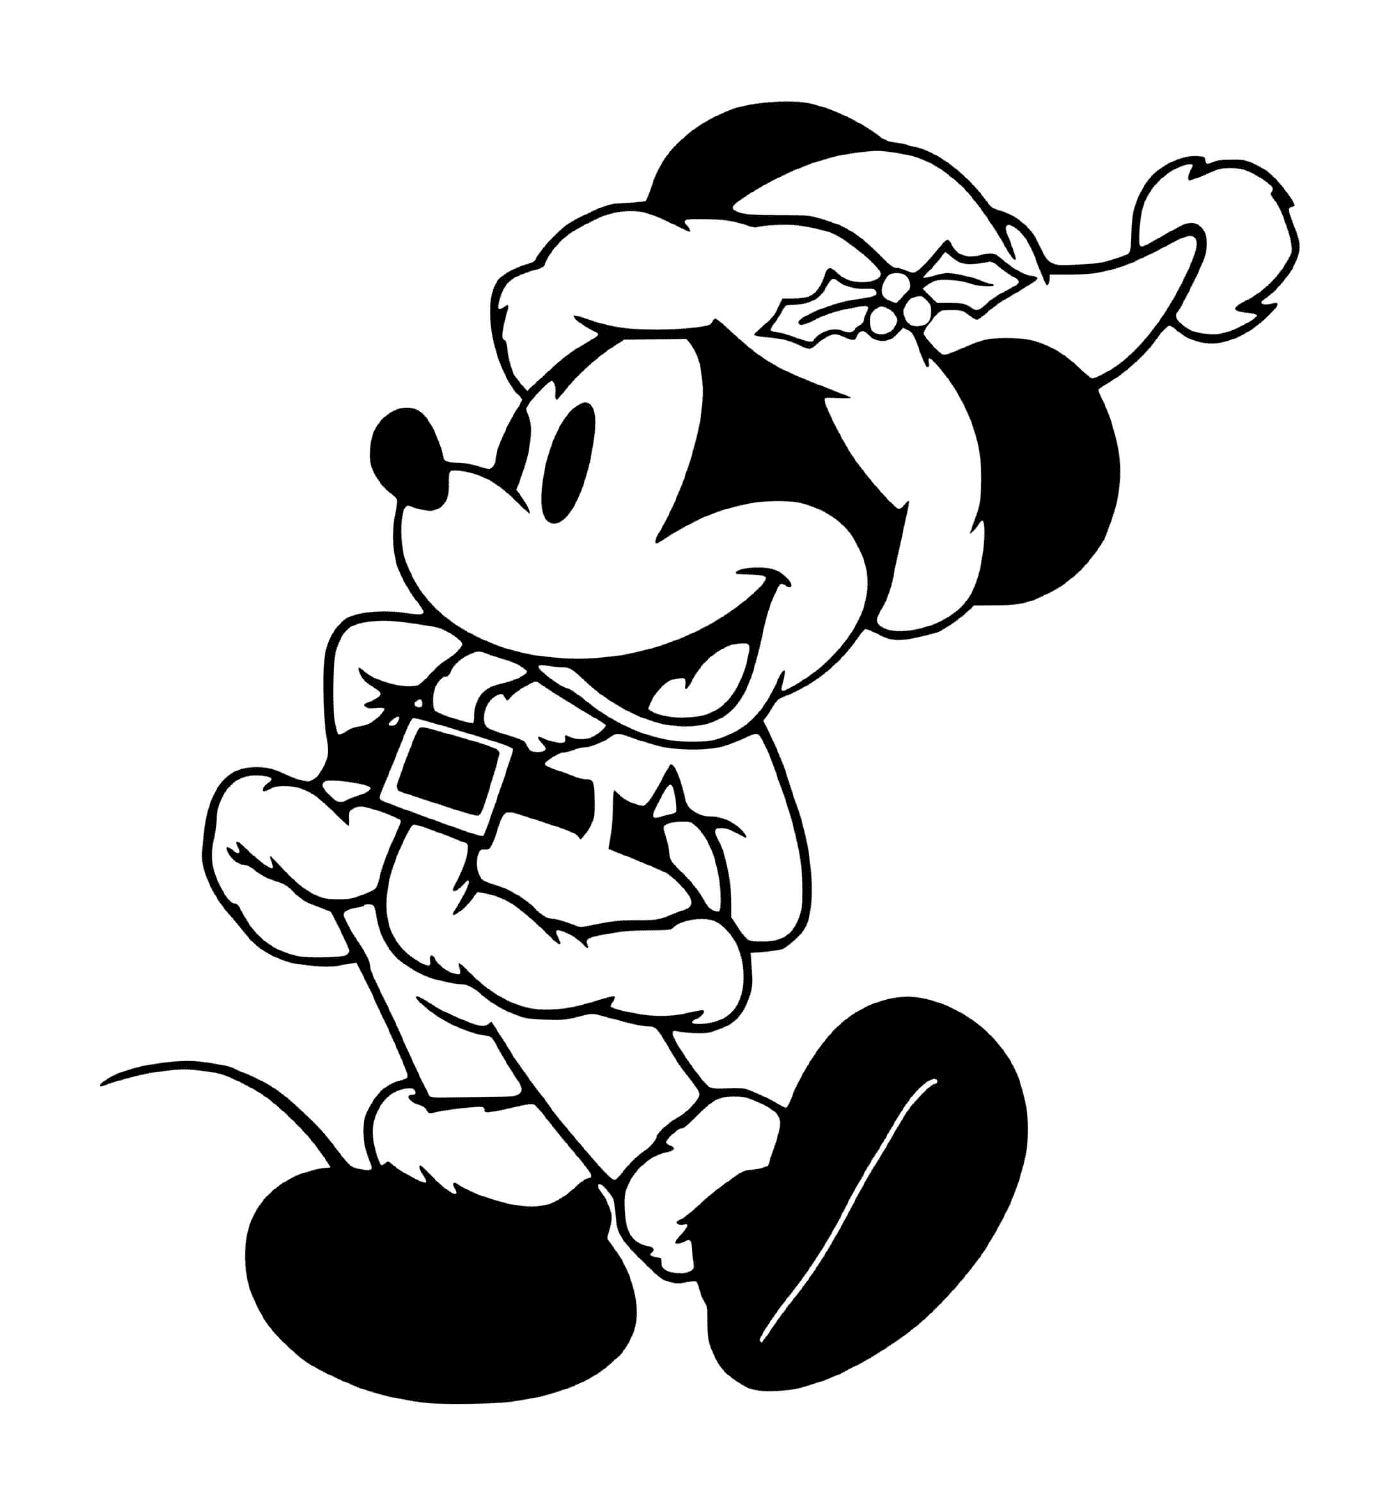  Mickey in classic Santa Claus 